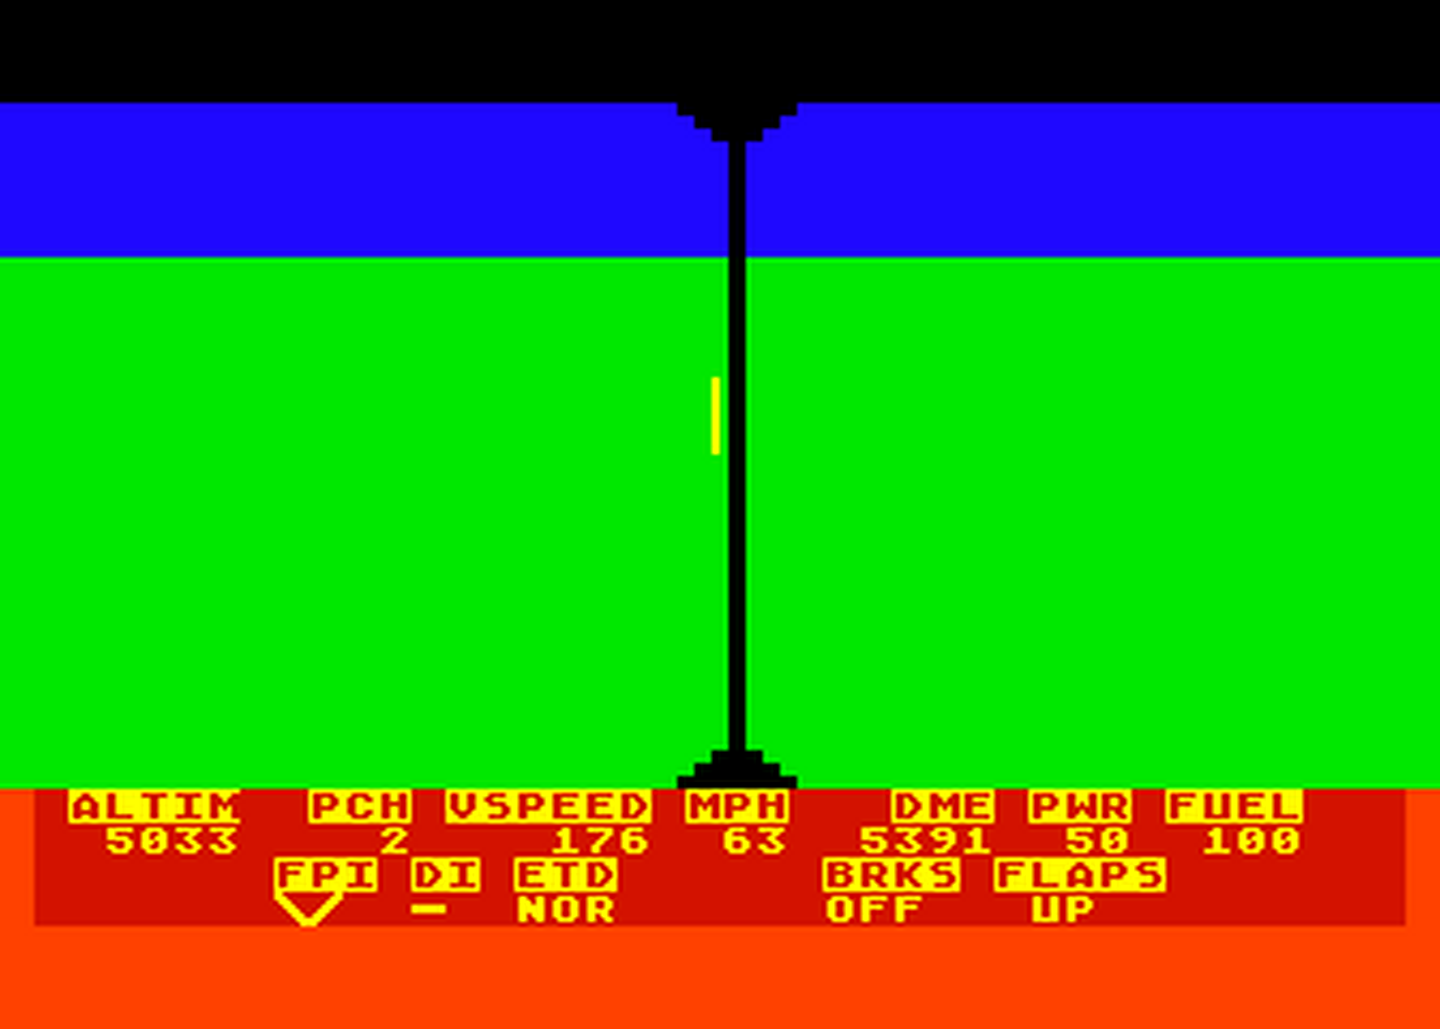 Atari GameBase Final_Flight! MMG_Micro_Software 1983